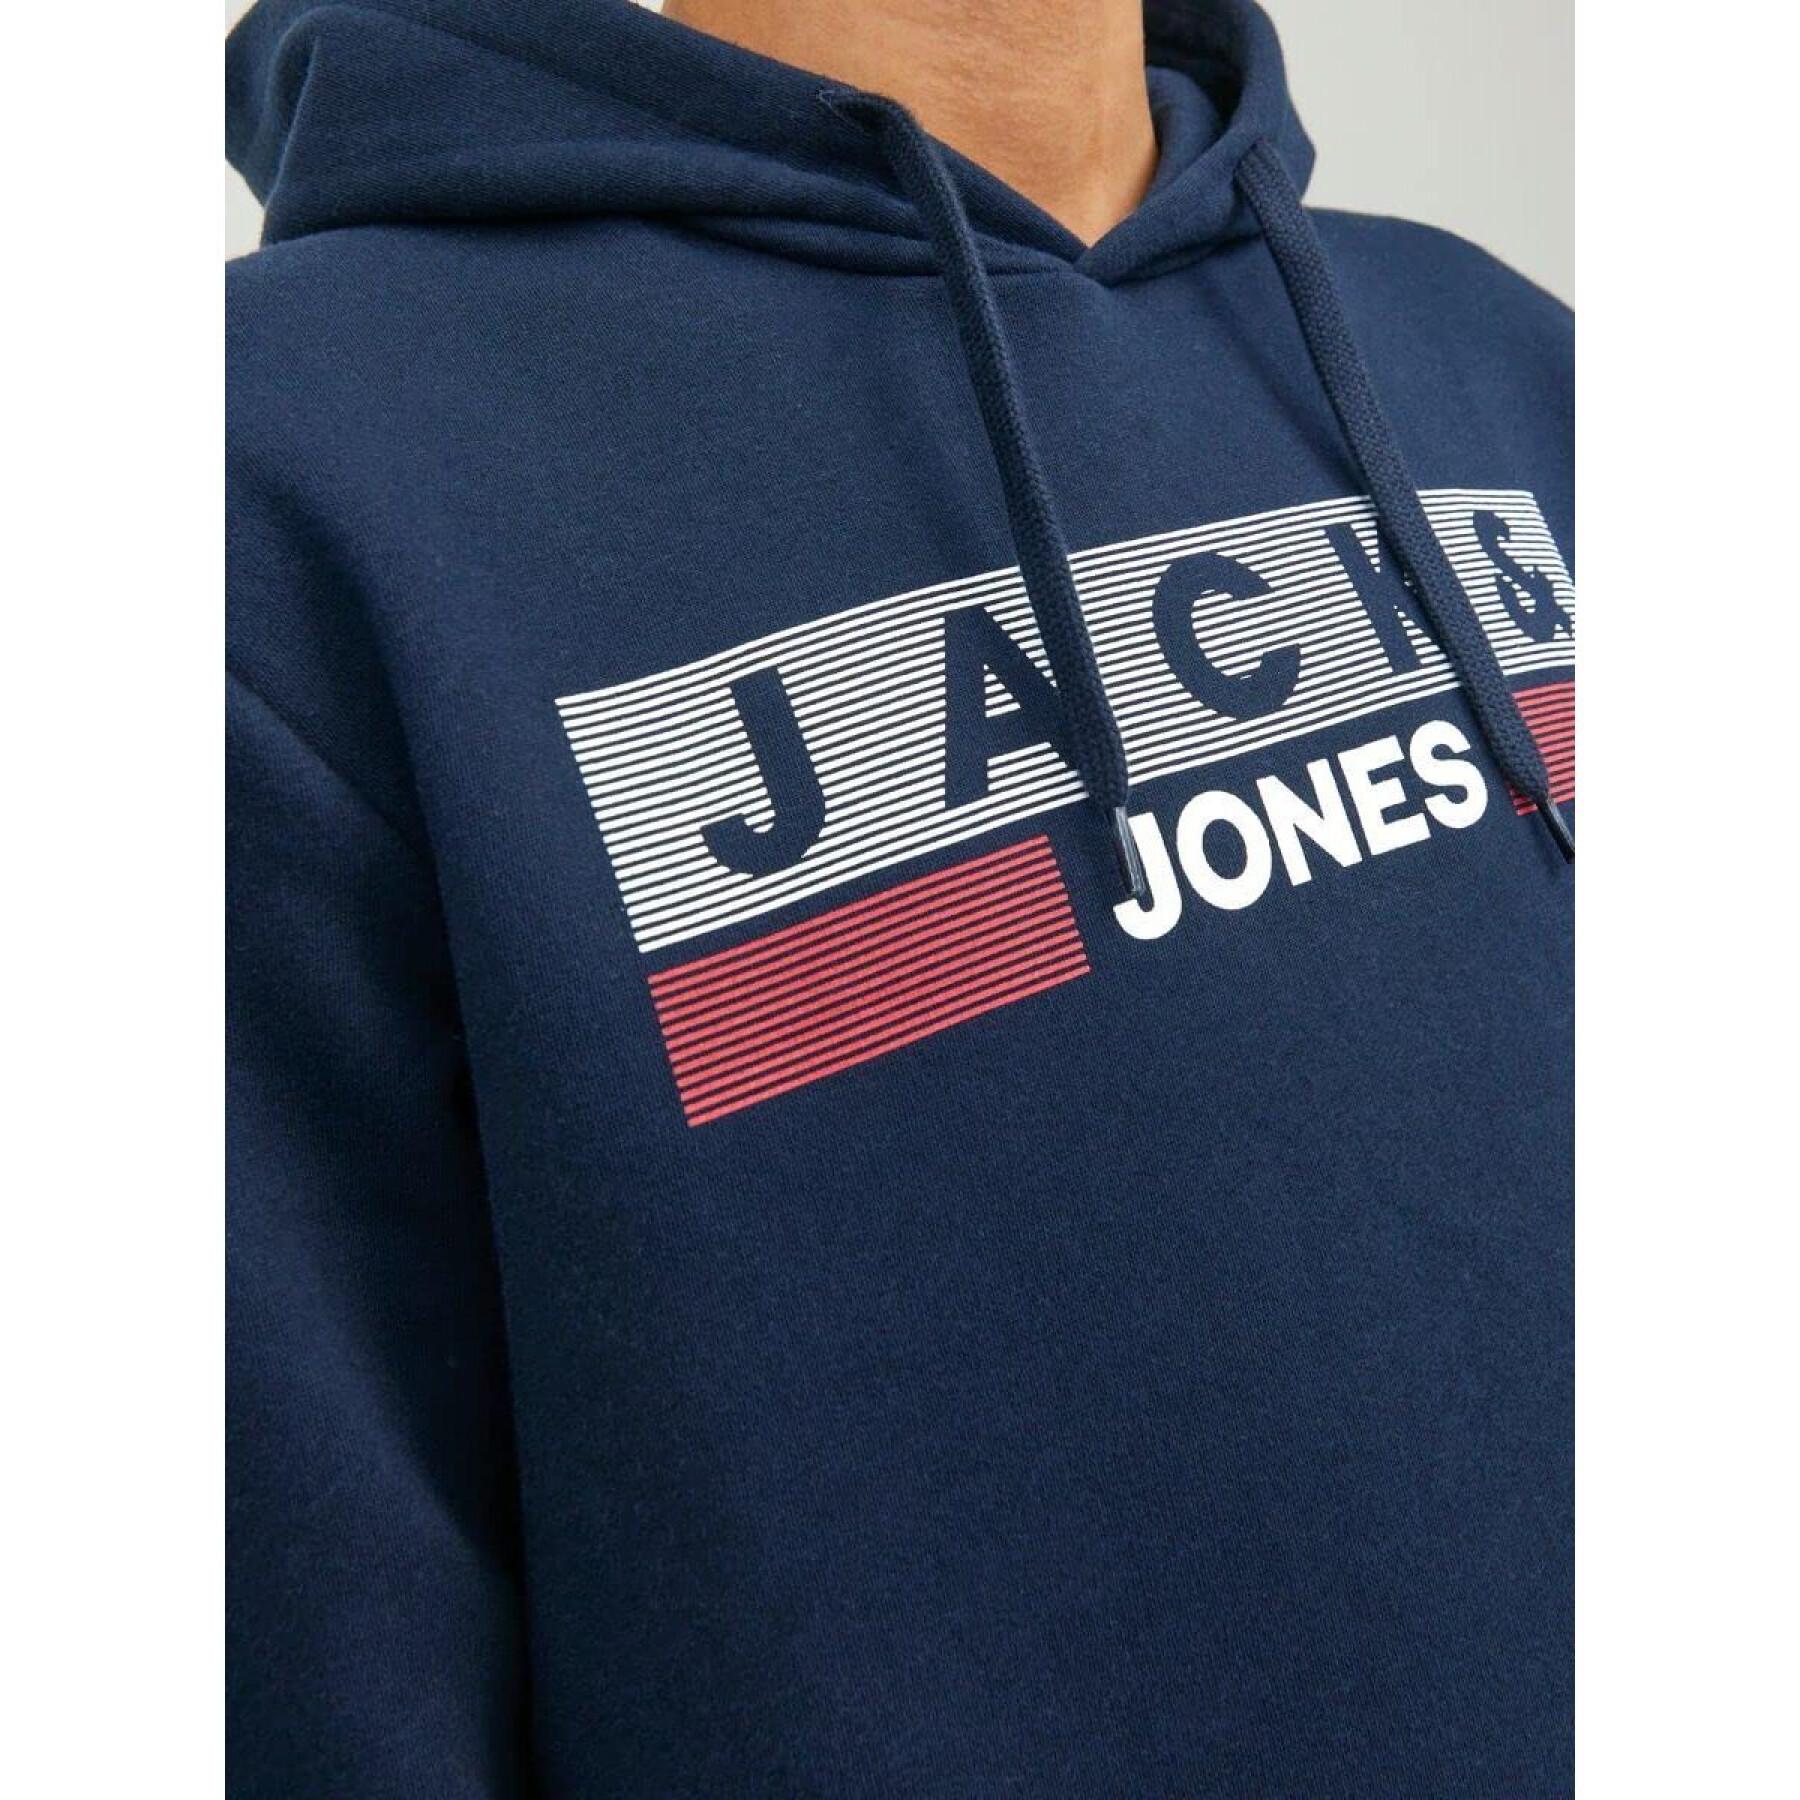 Kapuzenpullover Jack & Jones Corp Logo